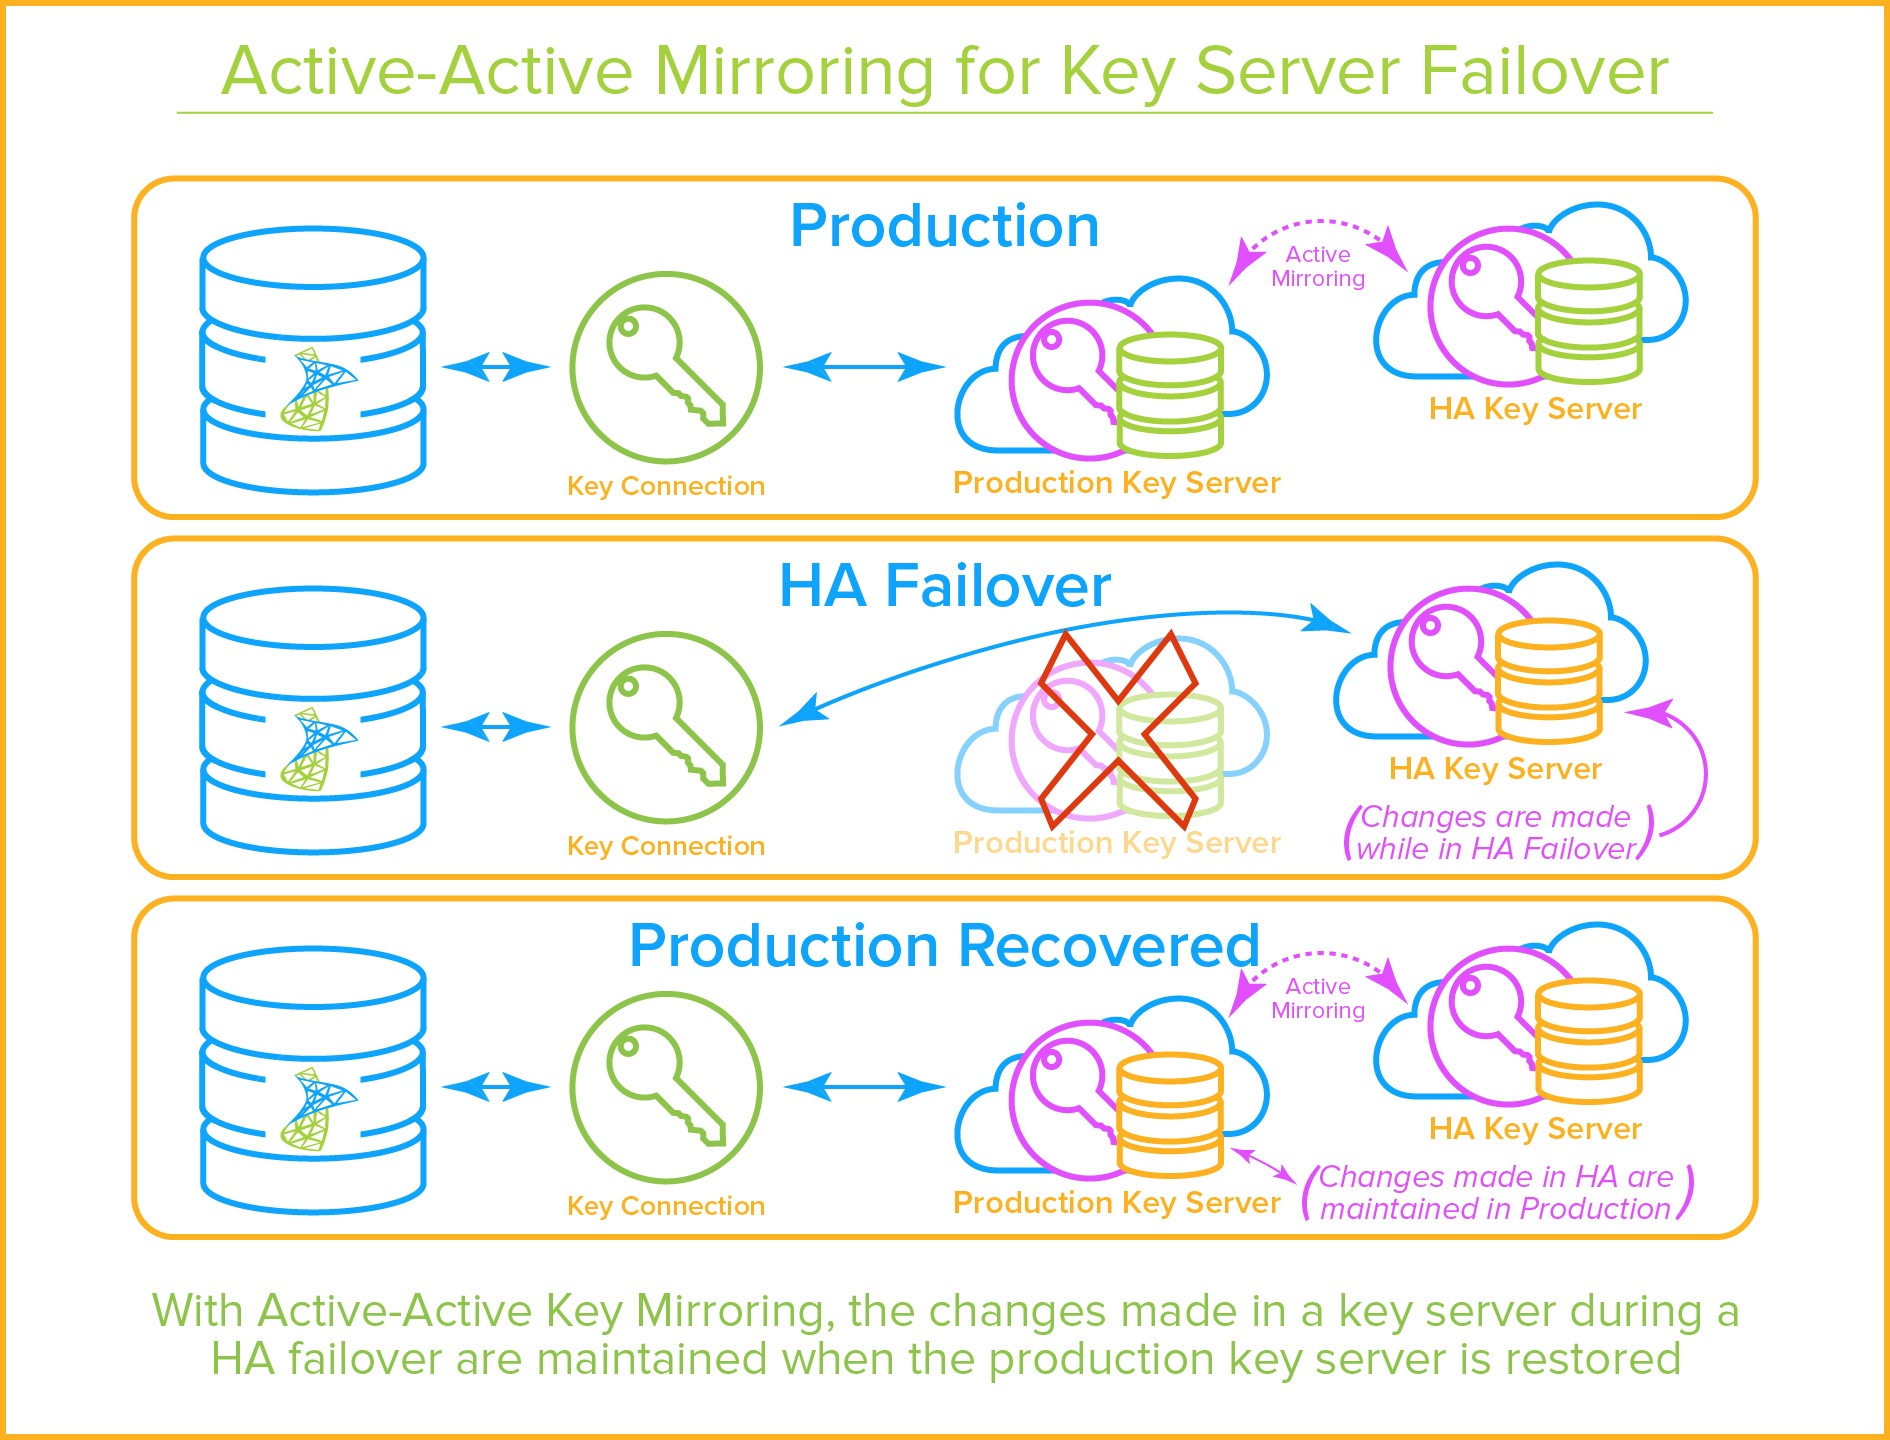 SQL Server EKM Provider - Active-Active Key Mirroring